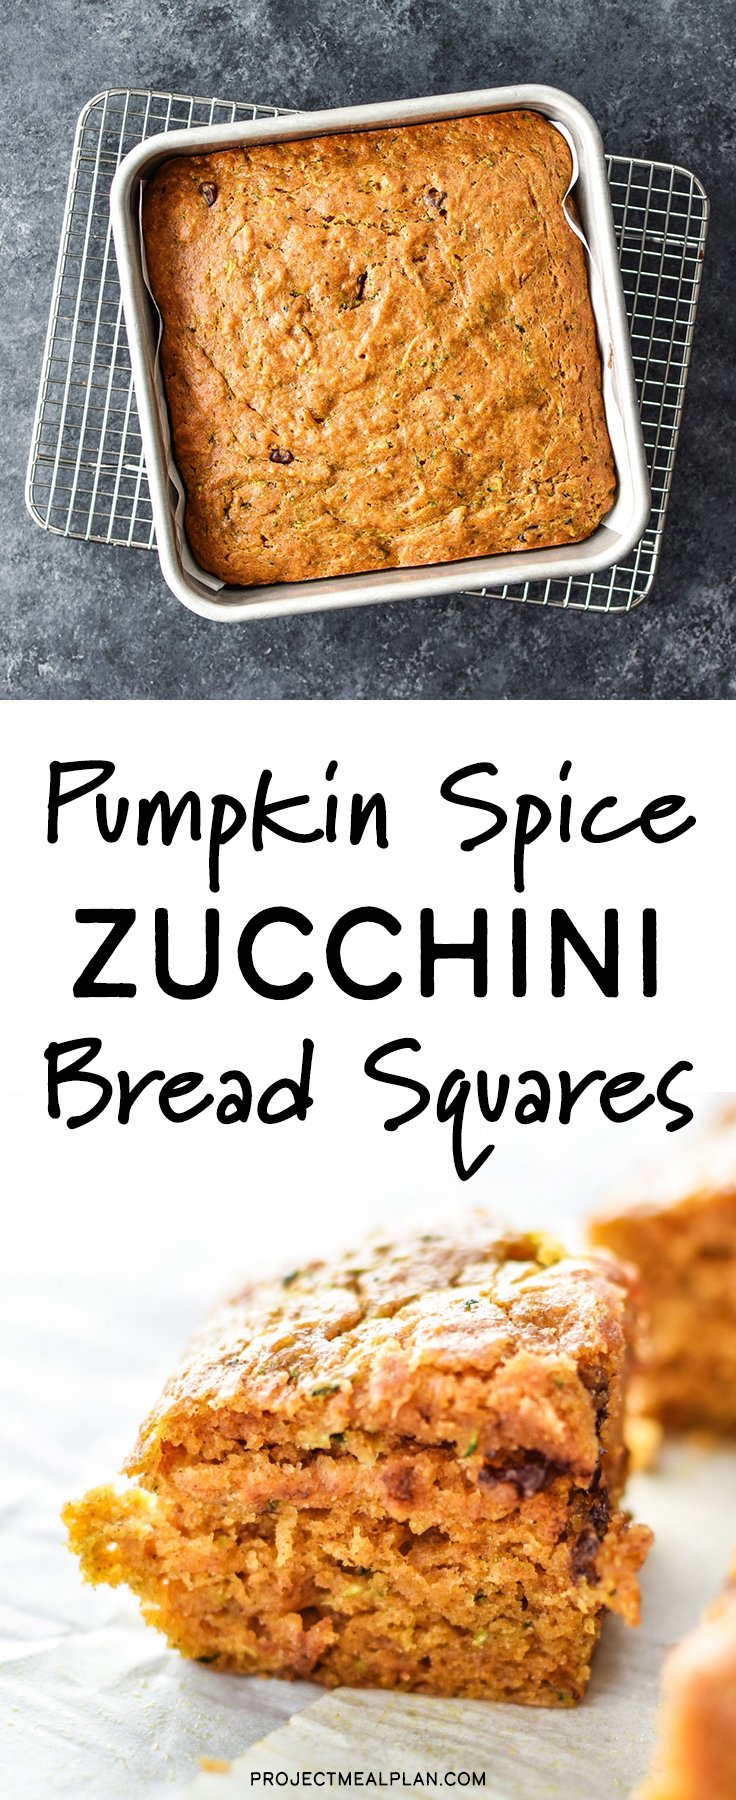 Pumpkin Spice Zucchini Bread Squares are the ultimate fall treat - zucchini bread crossed with pumpkin bars! - ProjectMealPlan.com